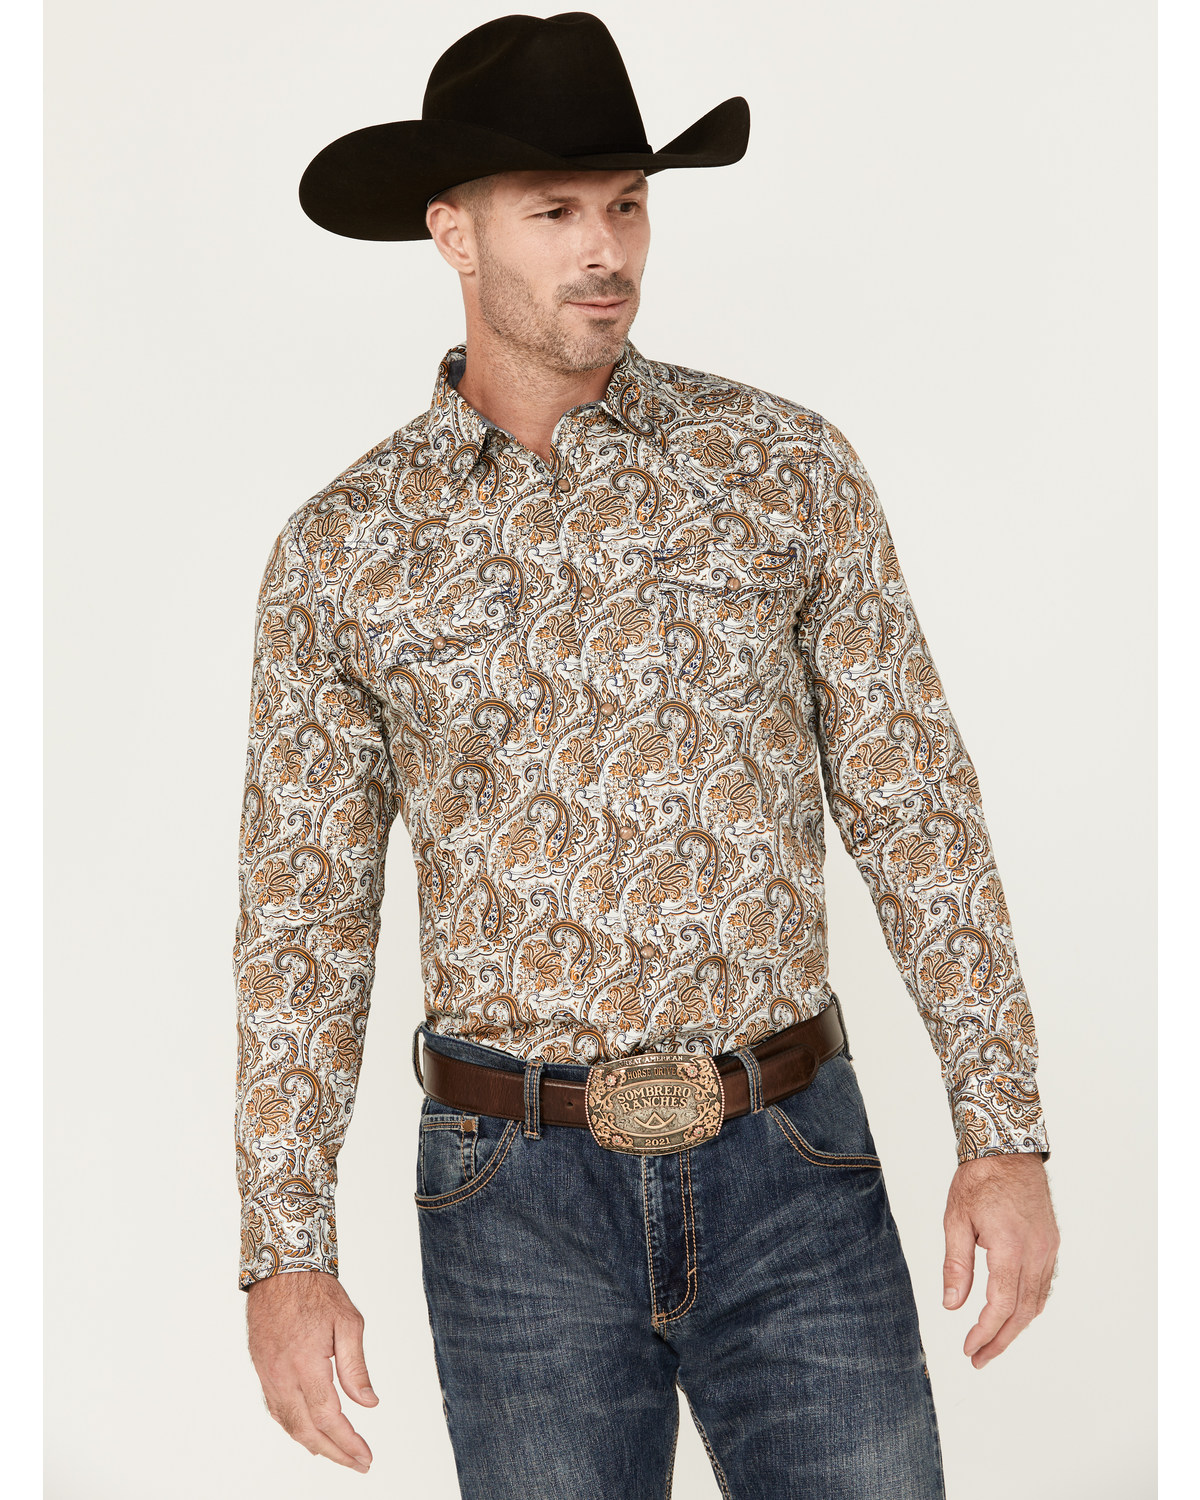 Cody James Men's Gold Dust Paisley Print Long Sleeve Snap Western Shirt - Big